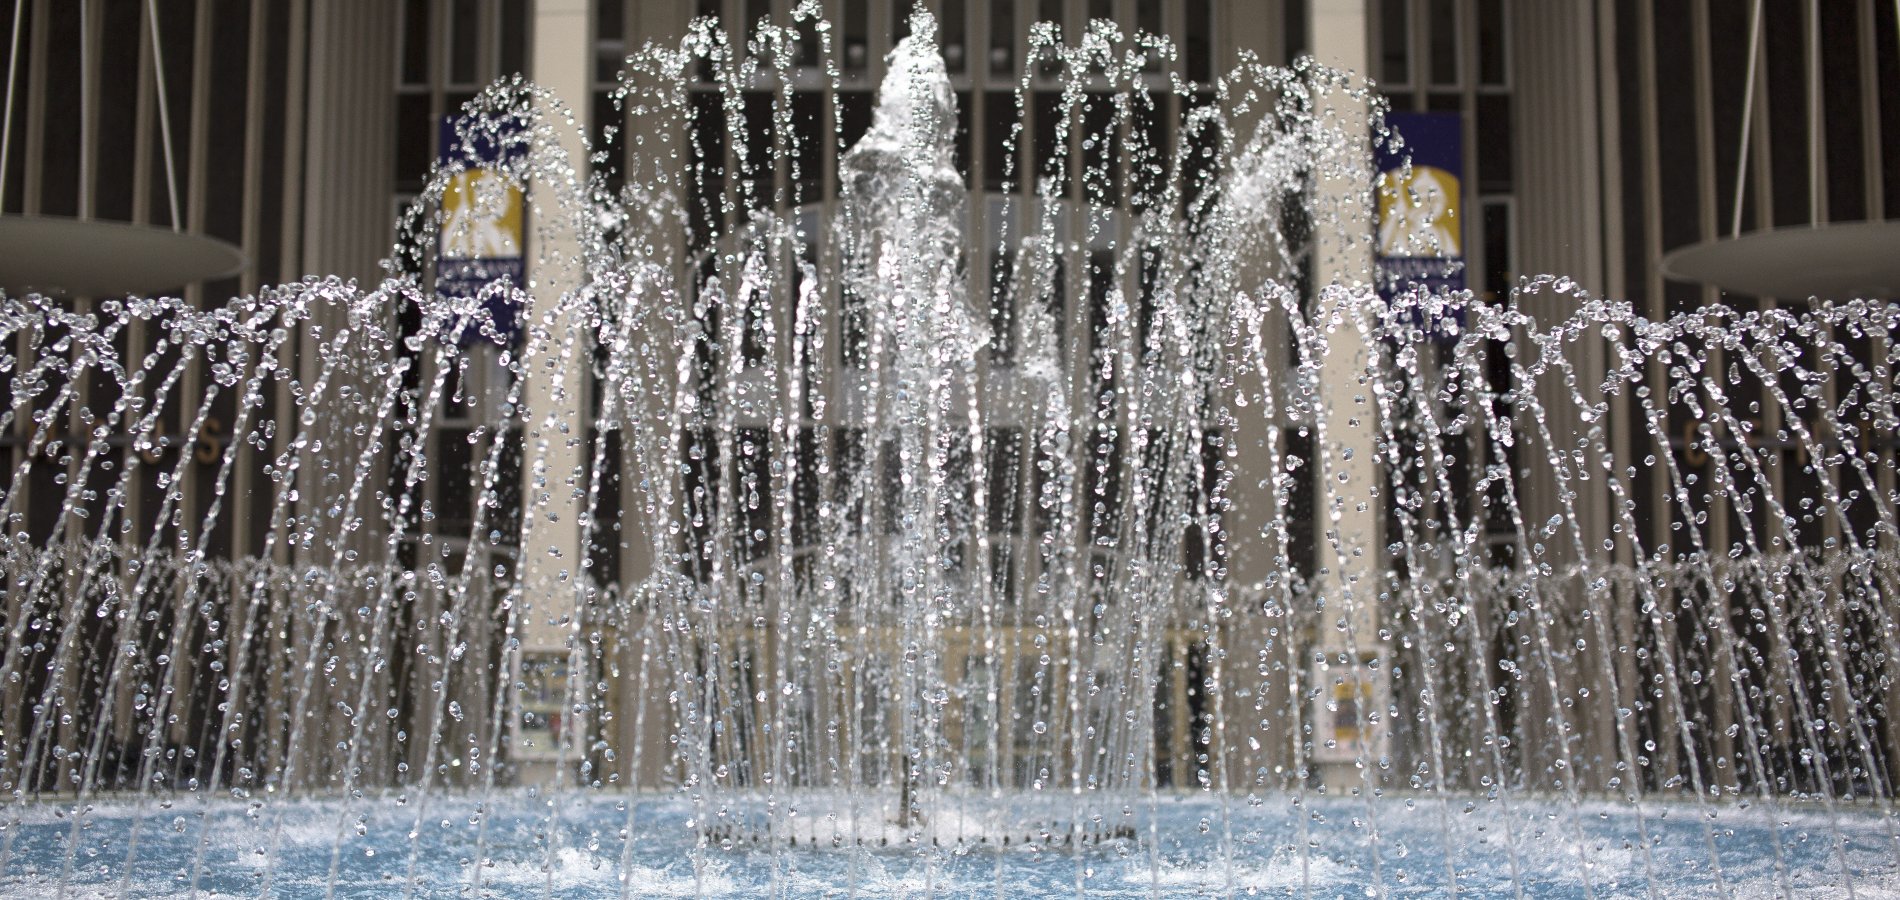 uptown campus water fountain 